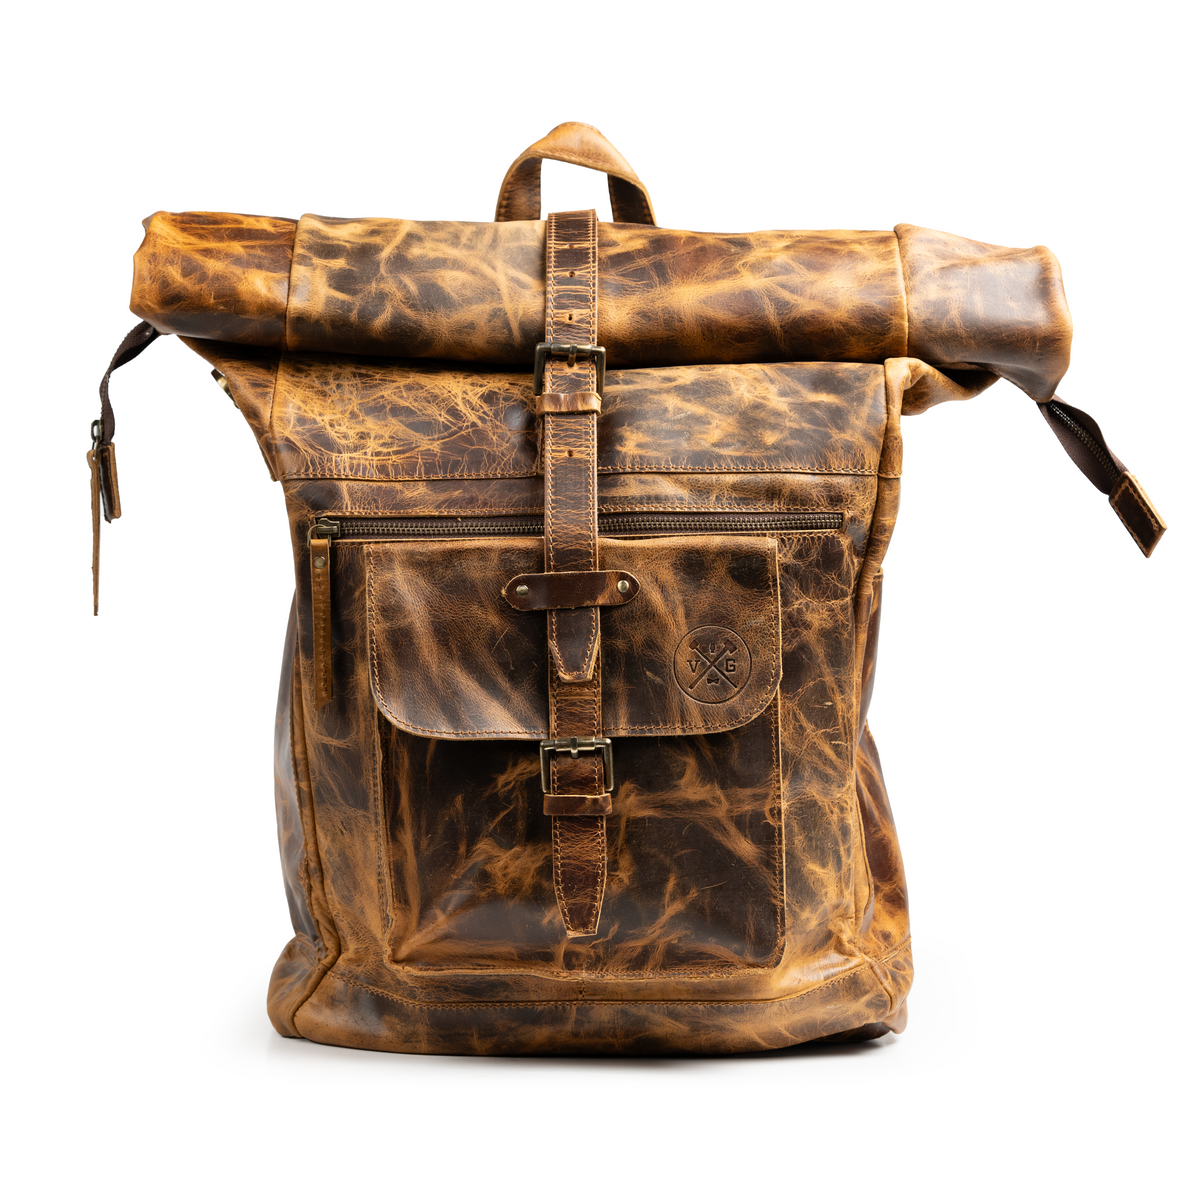 PREORDER: Buffalo Leather Duffle Bag by Vintage Gentlemen – Campmor